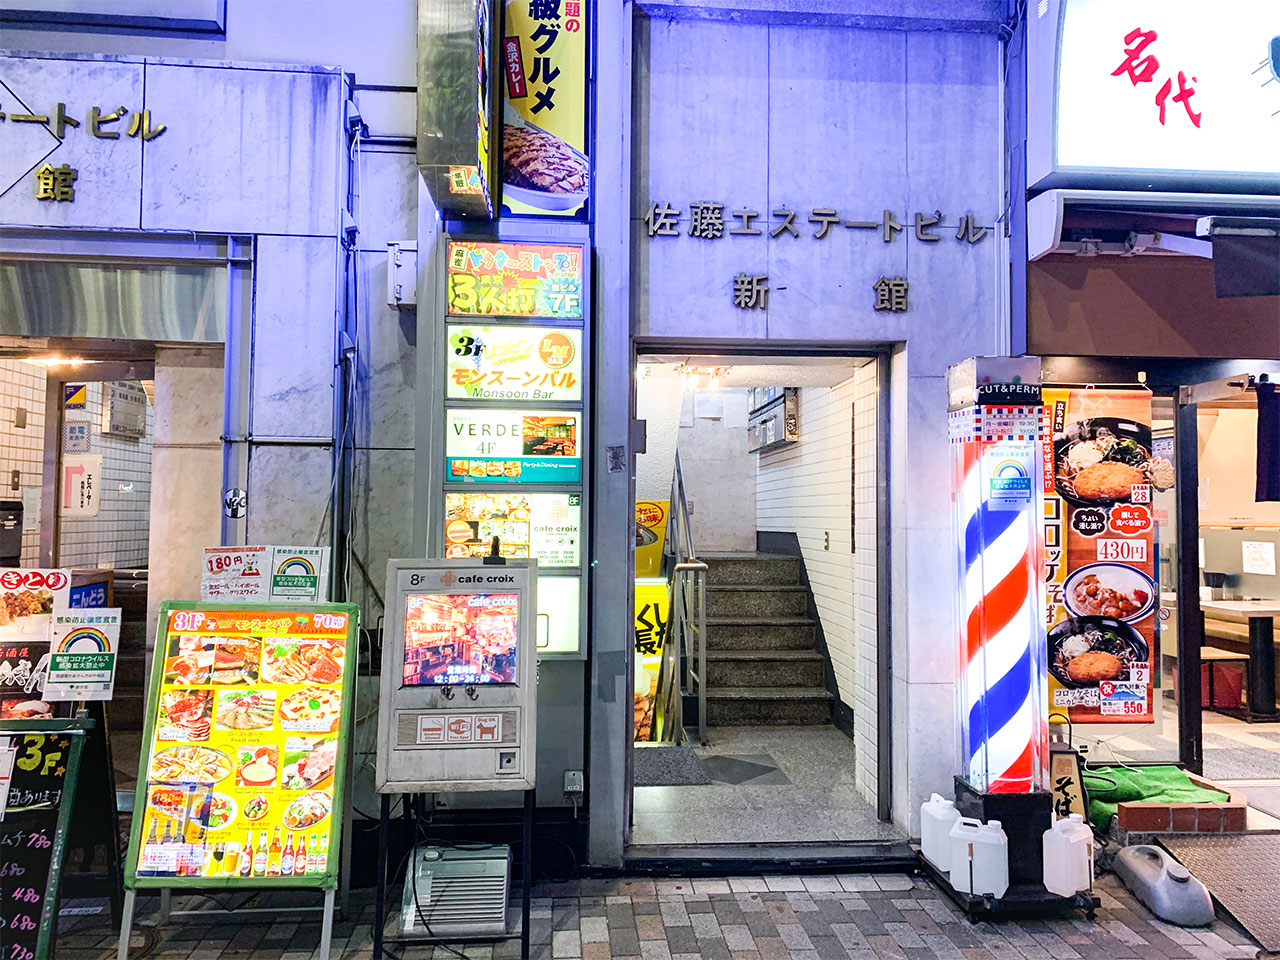 cafe croix (カフェ クロワ) 渋谷店